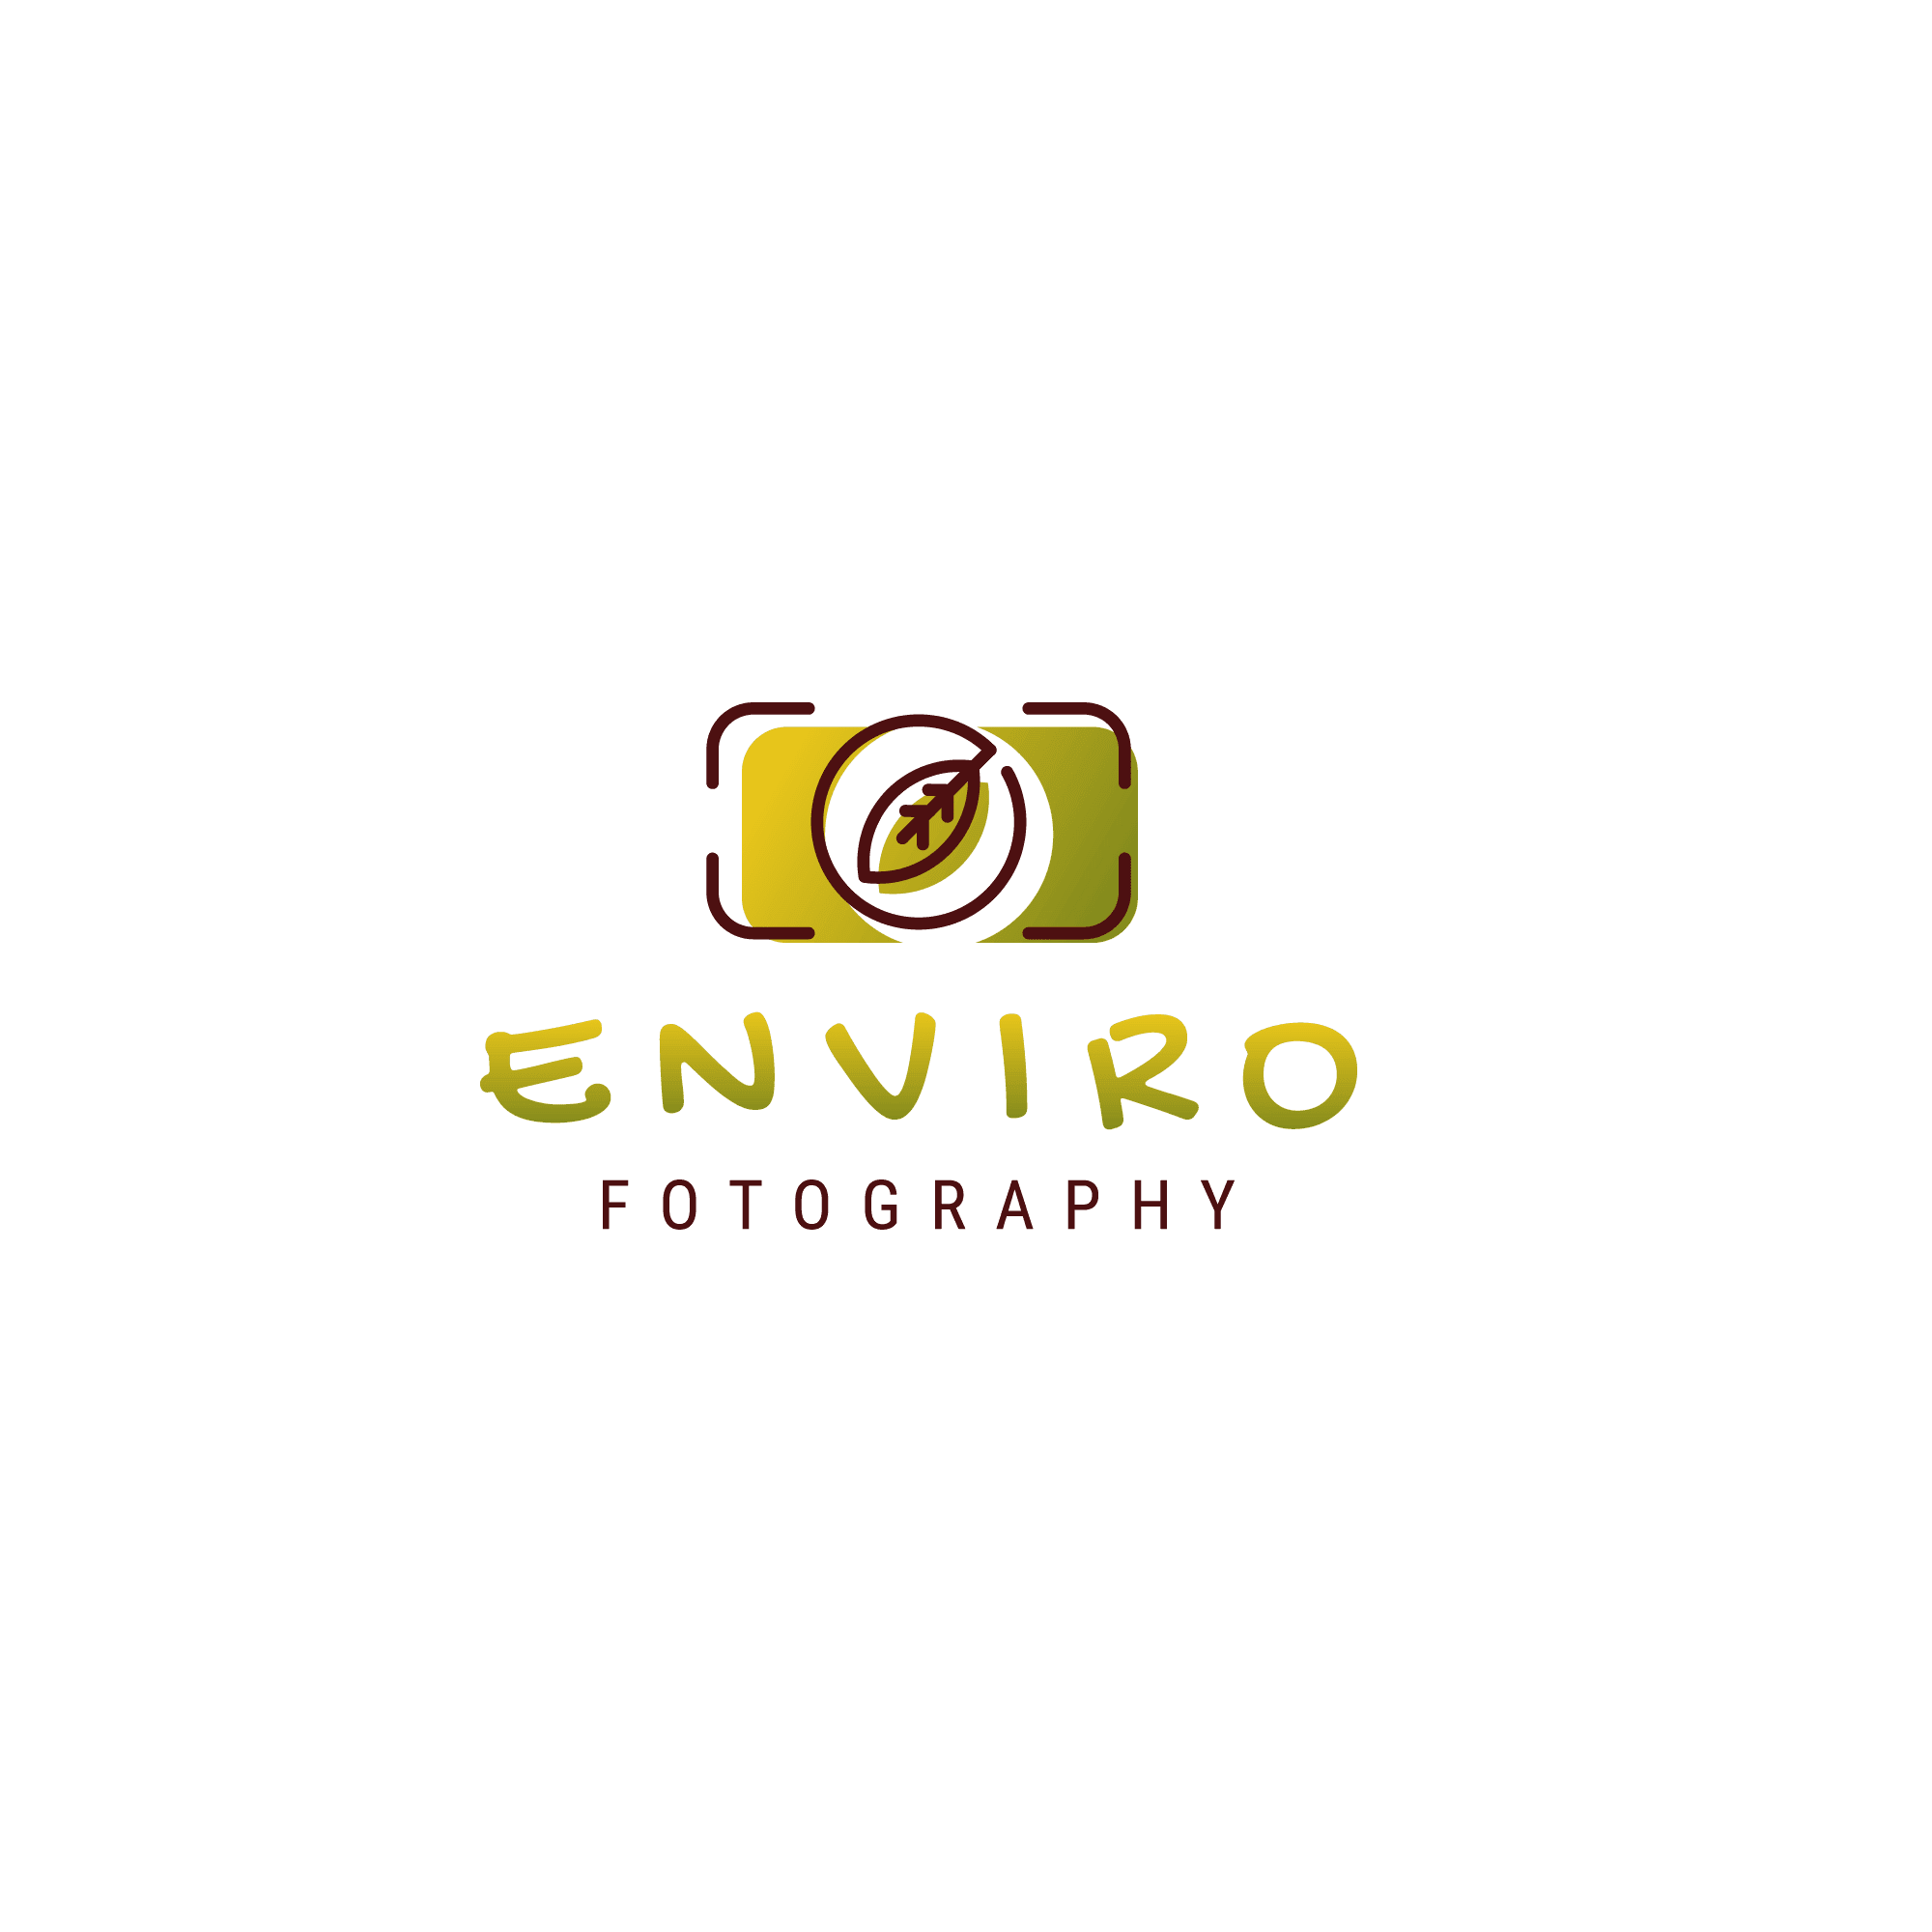 Enviro Fotography